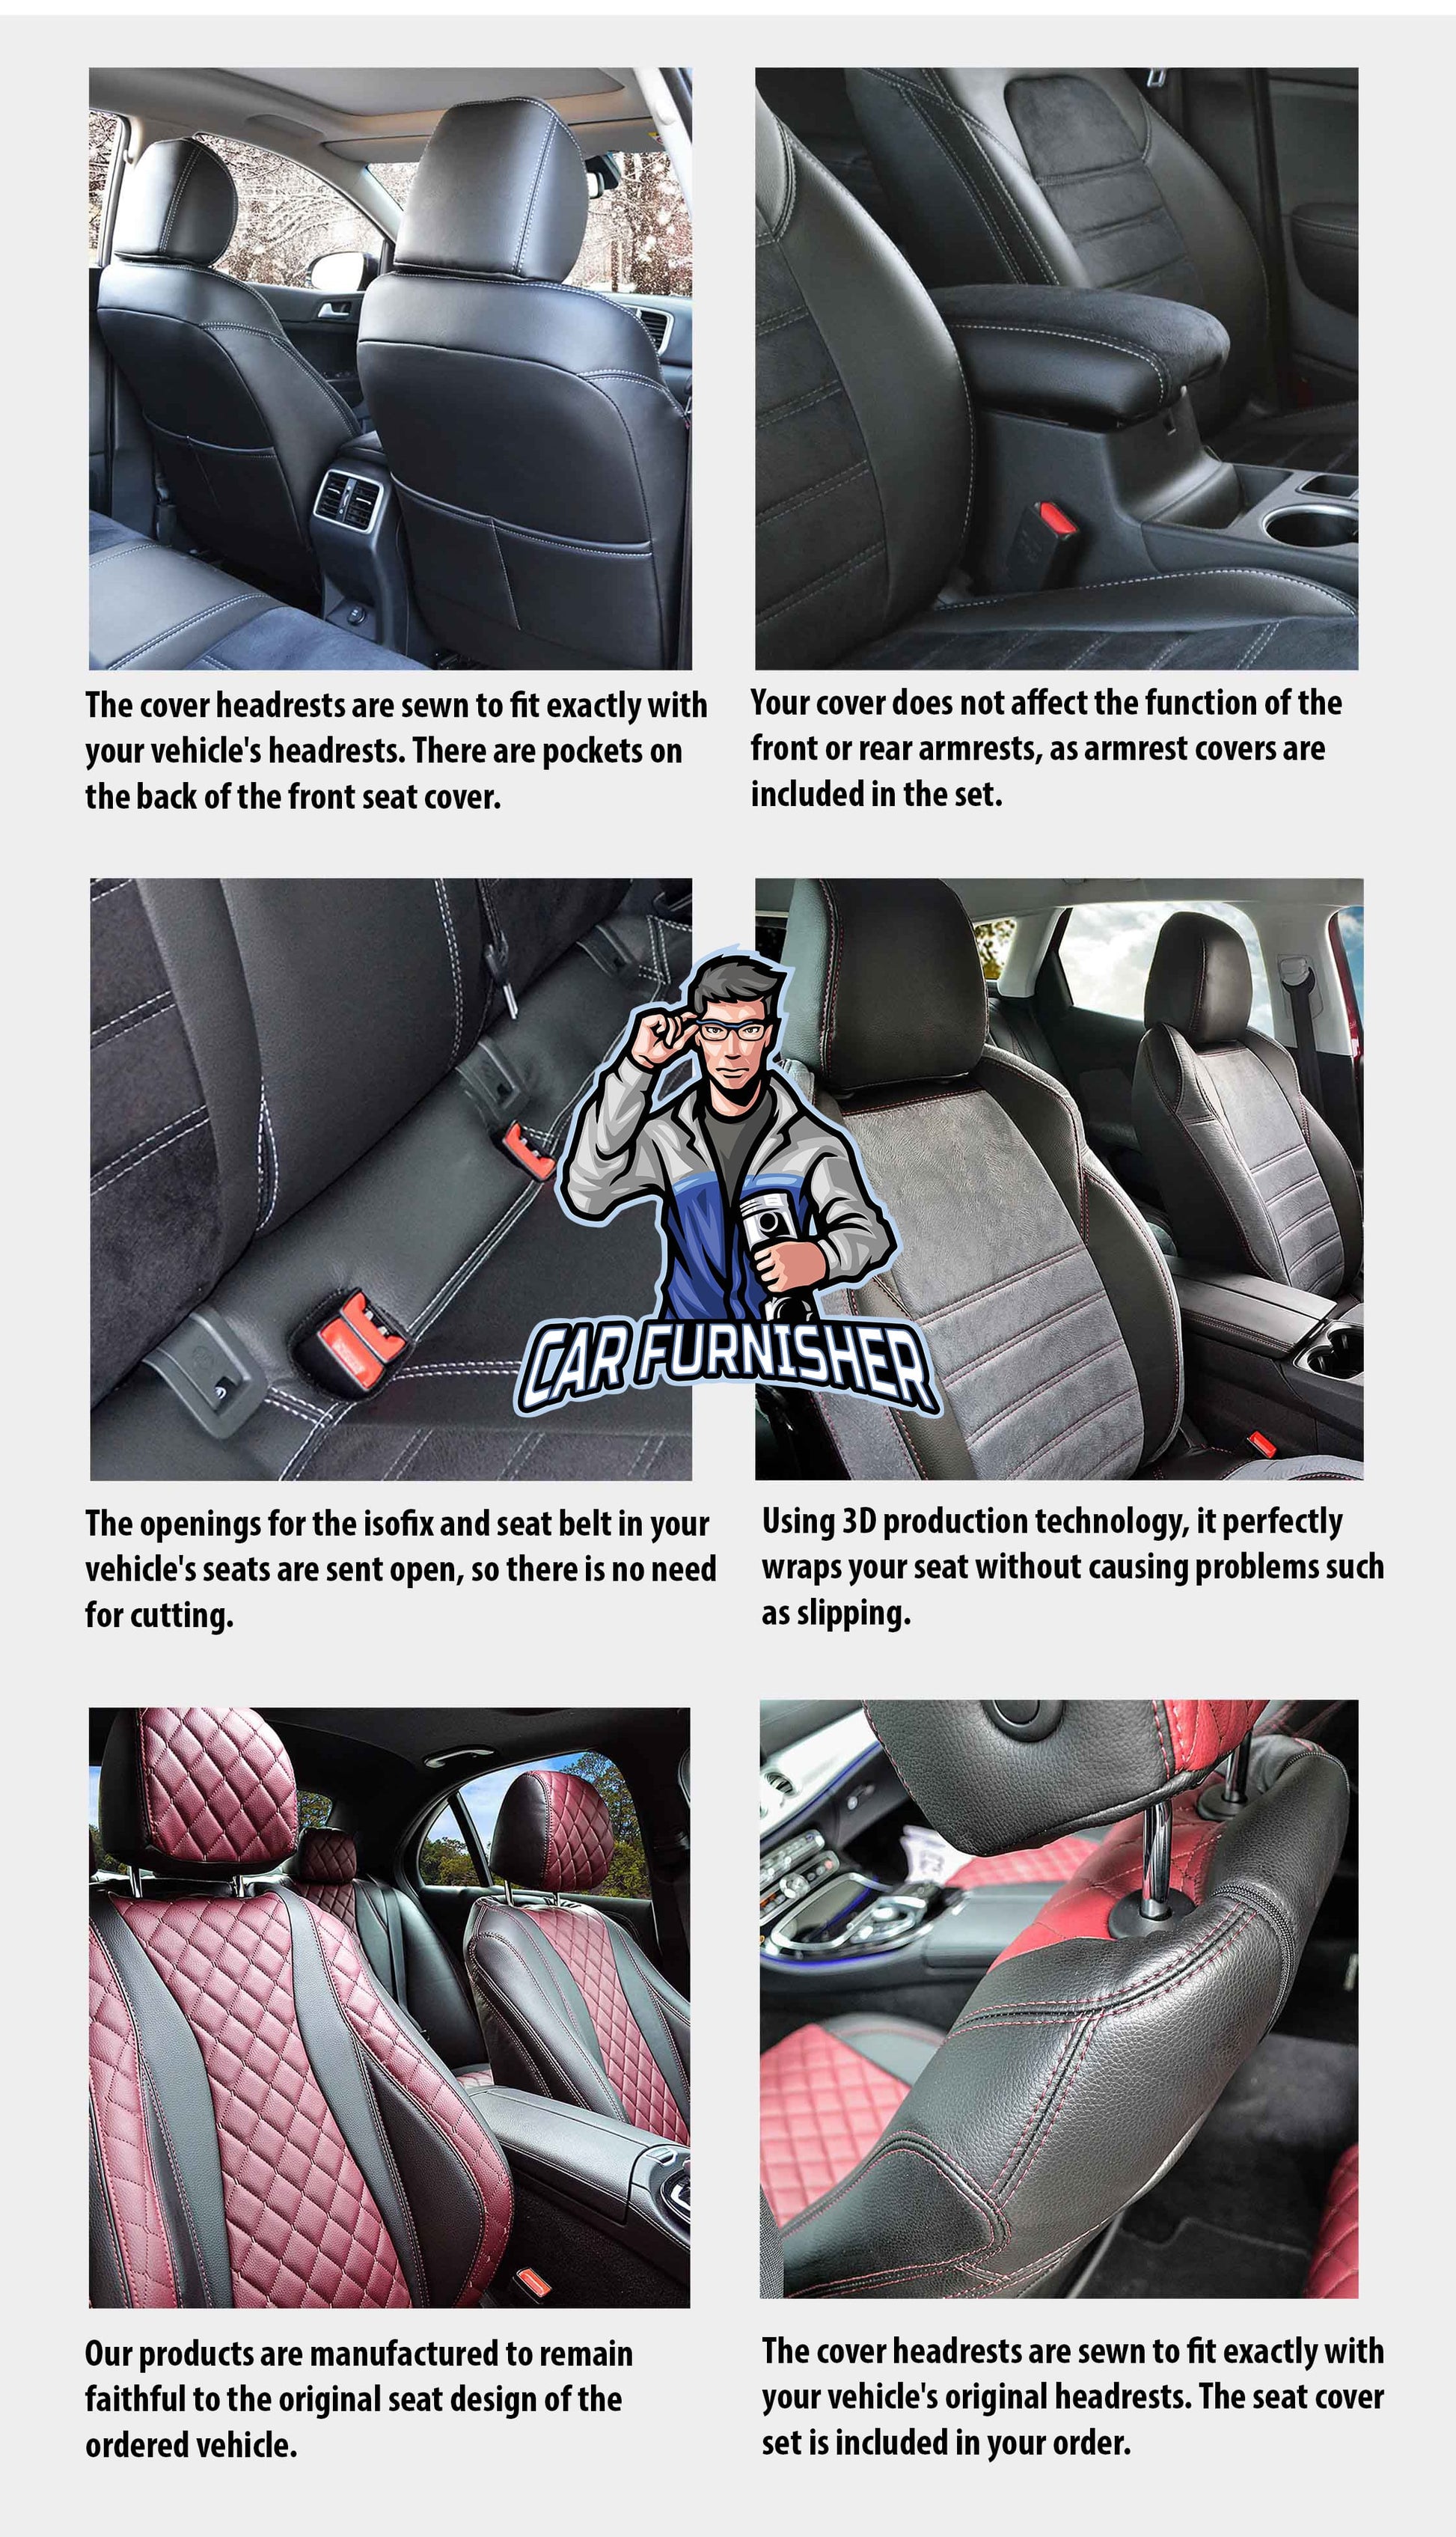 Nissan Navara Seat Covers Amsterdam Leather Design Dark Gray Leather